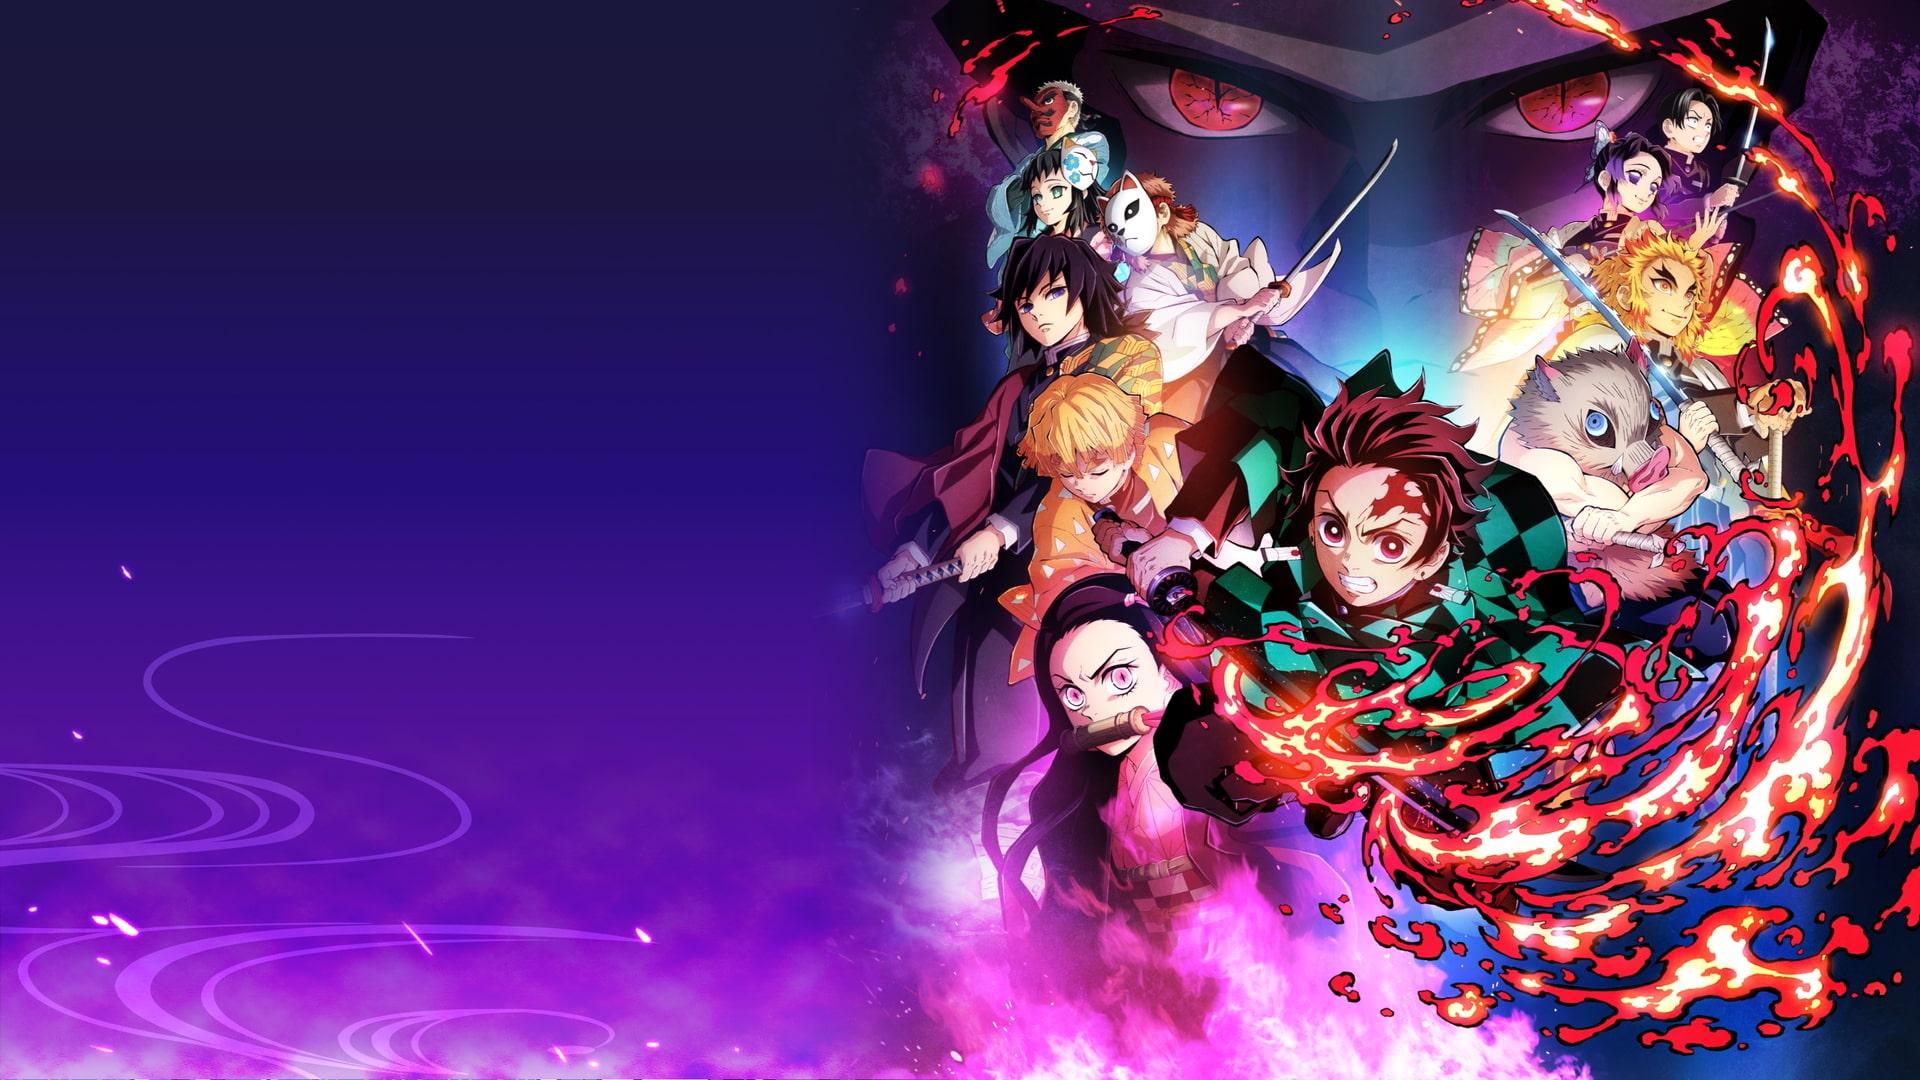 Demon Slayer: Kimetsu no Yaiba games announced for PS4, iOS and